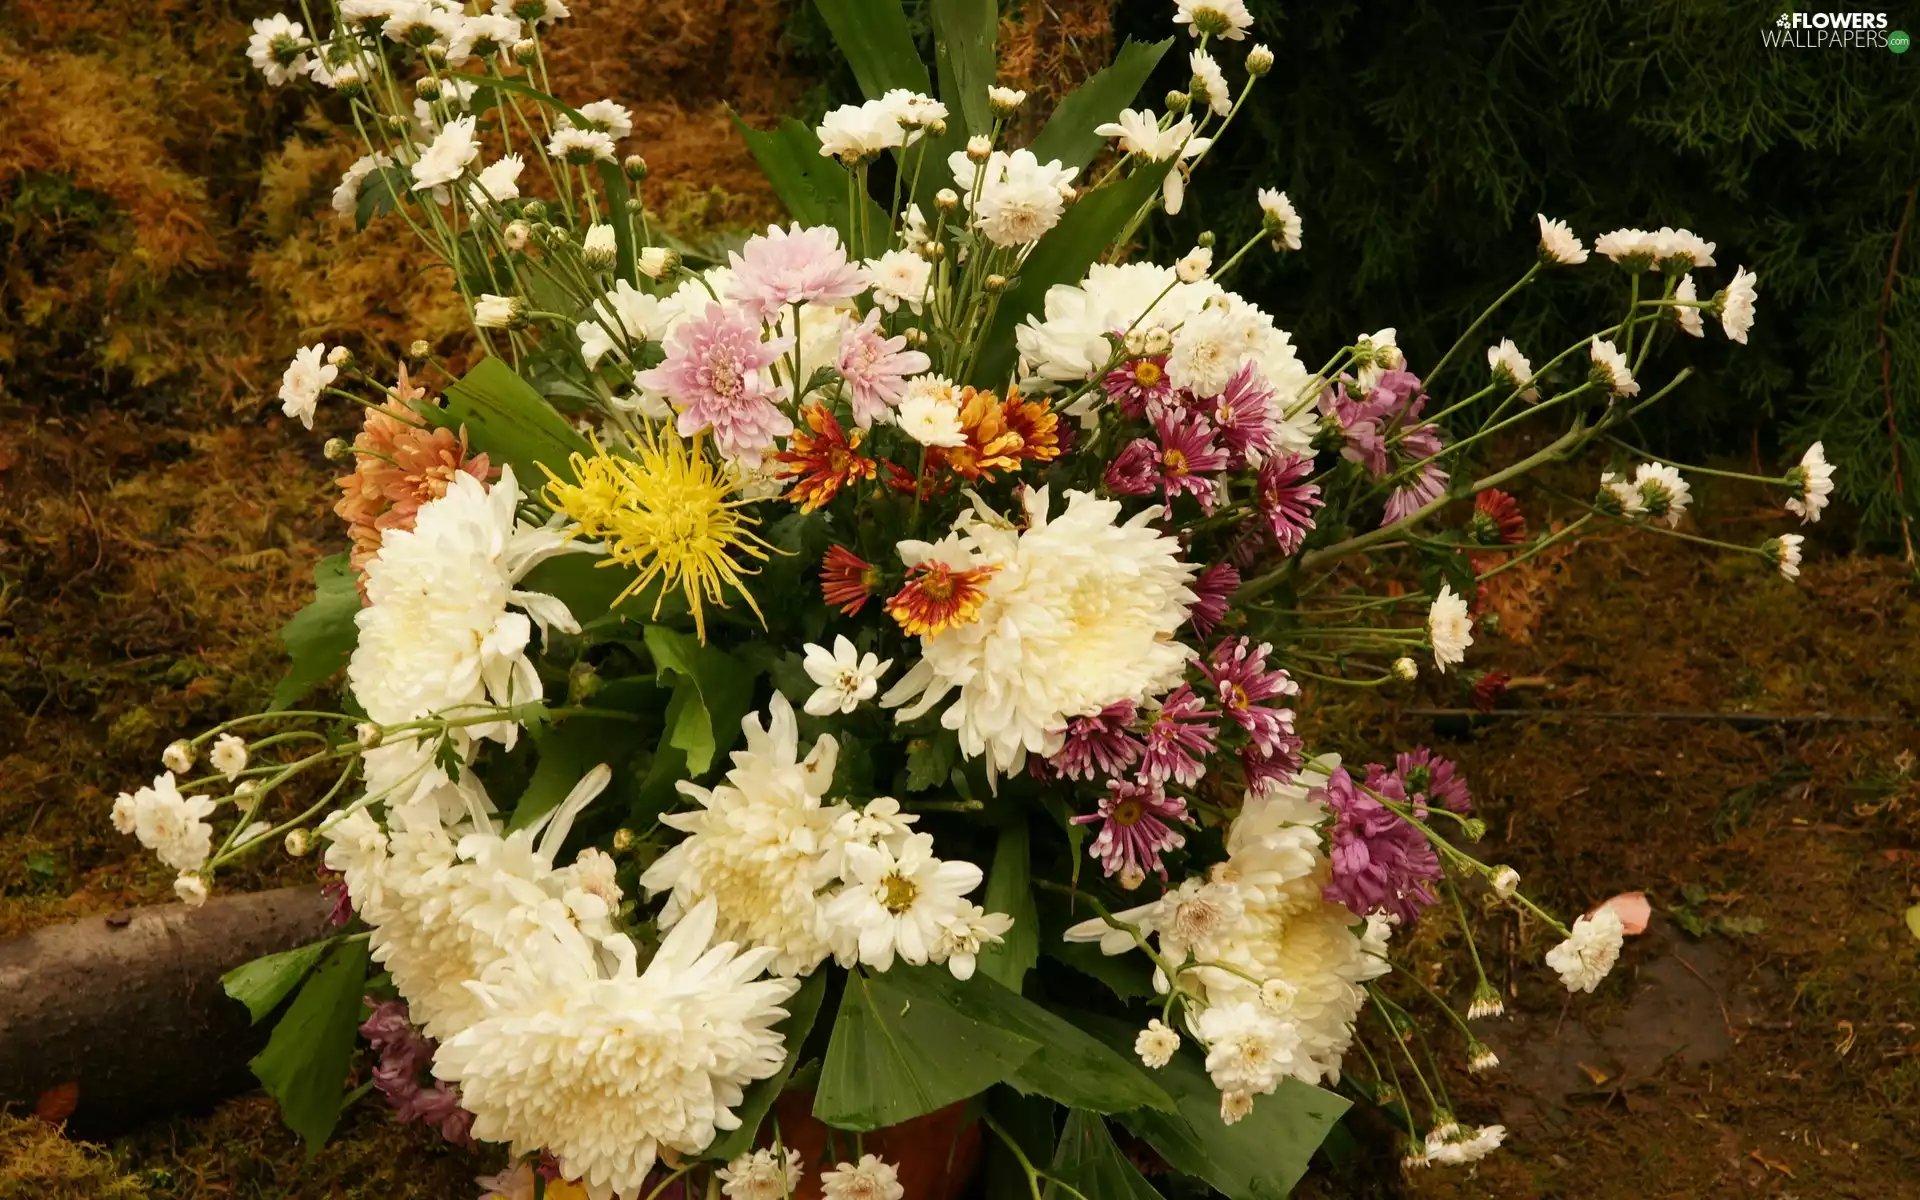 flowers, bouquet, different